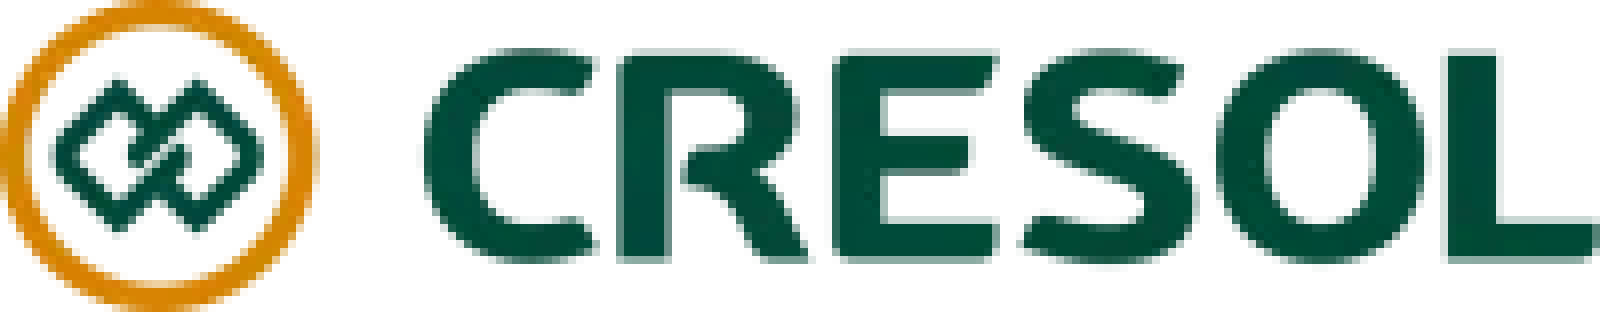 cropped-cresol-logo-1